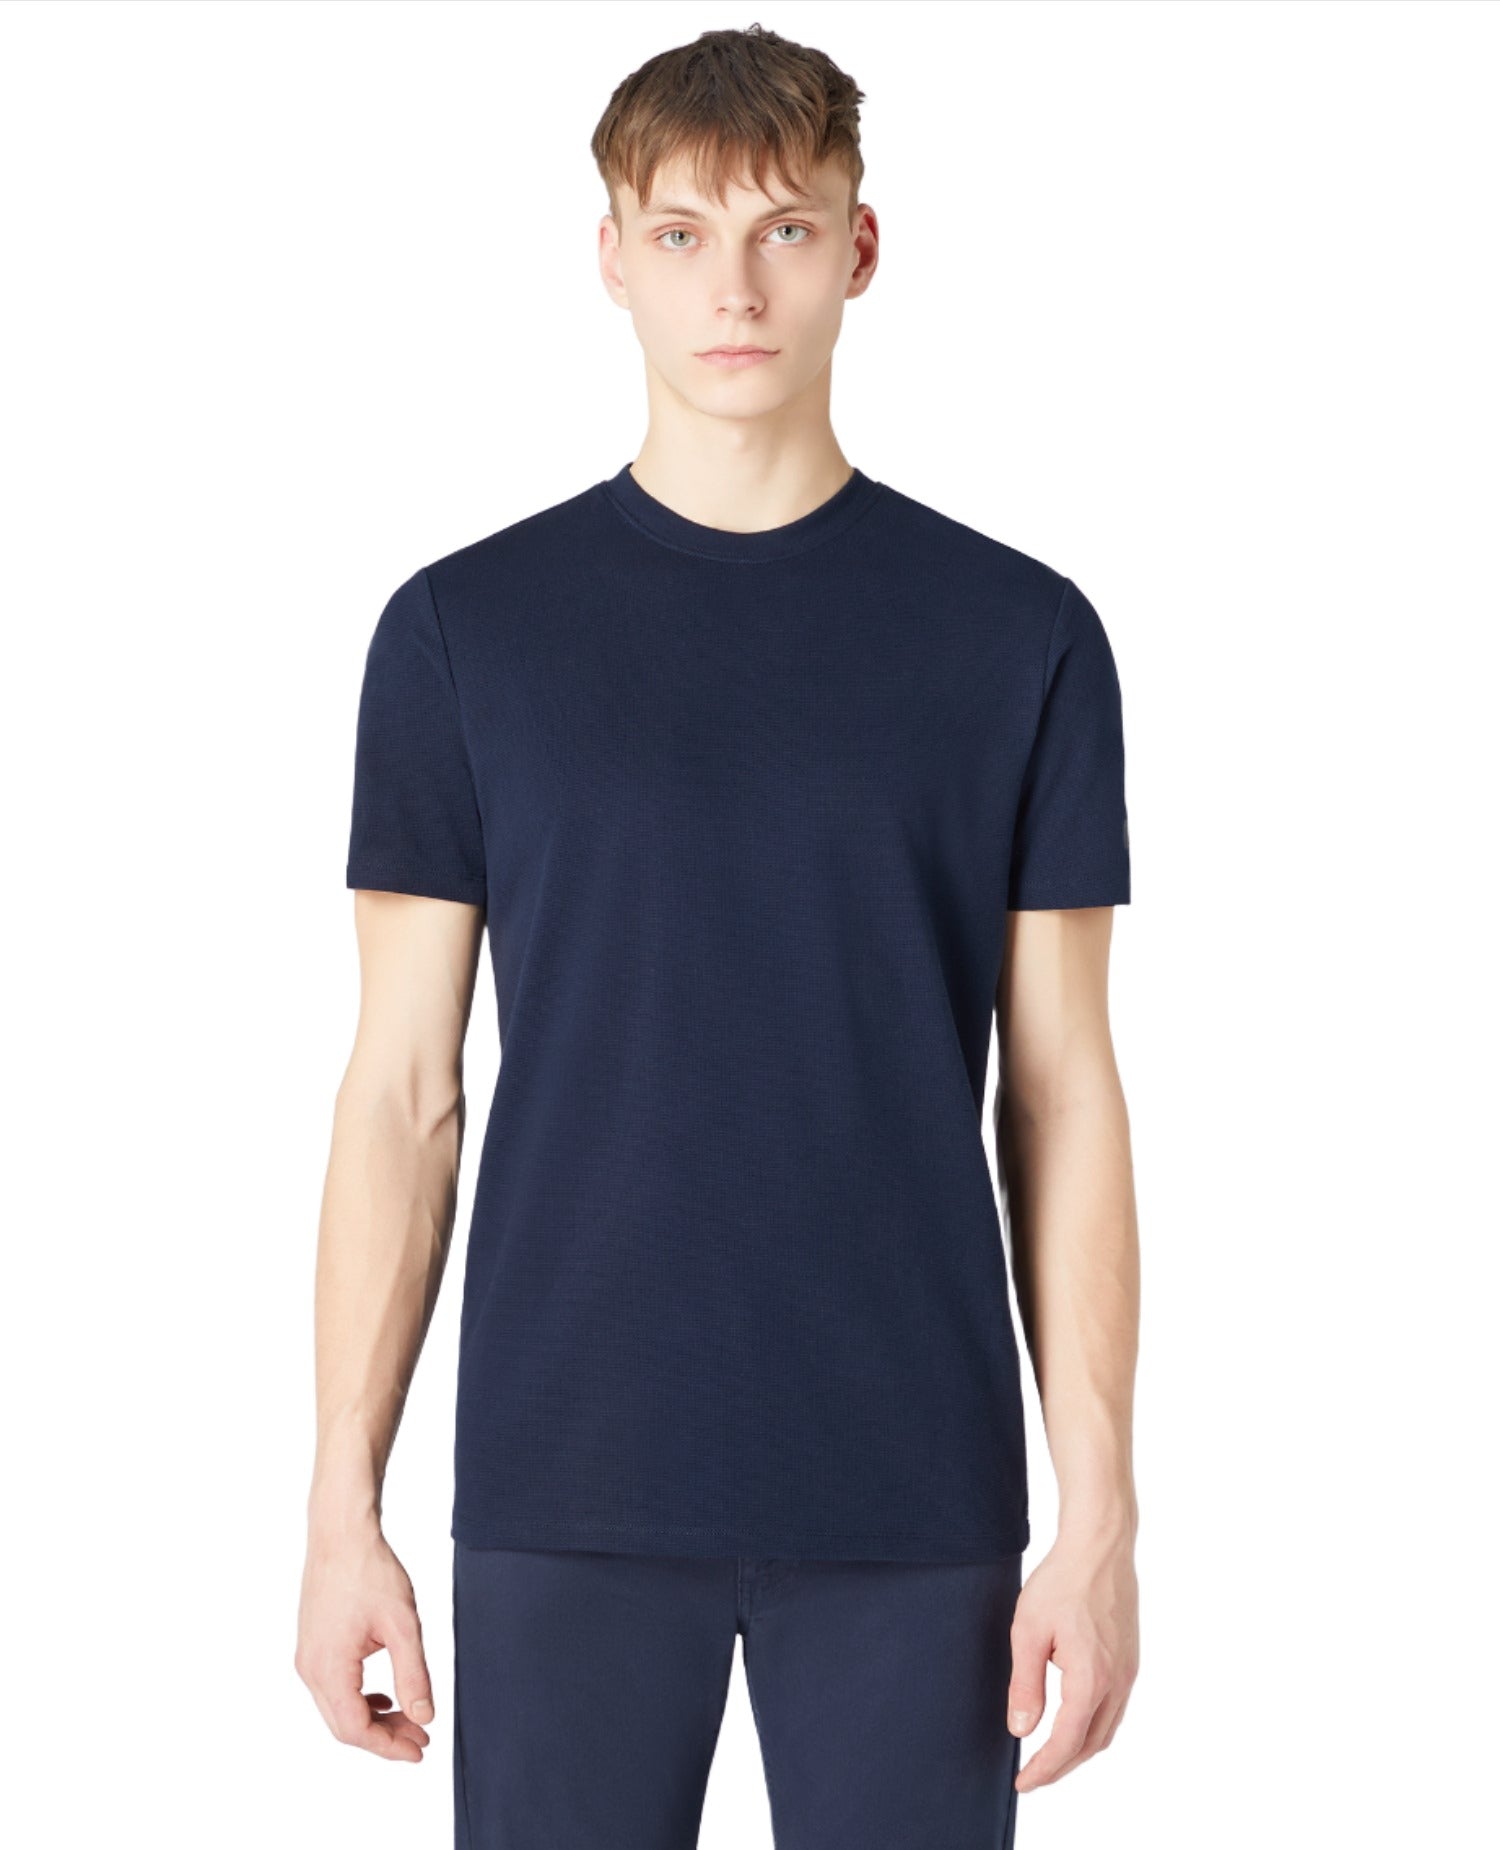 ID70224-Remus Navy T-Shirt | Zebra Menswear